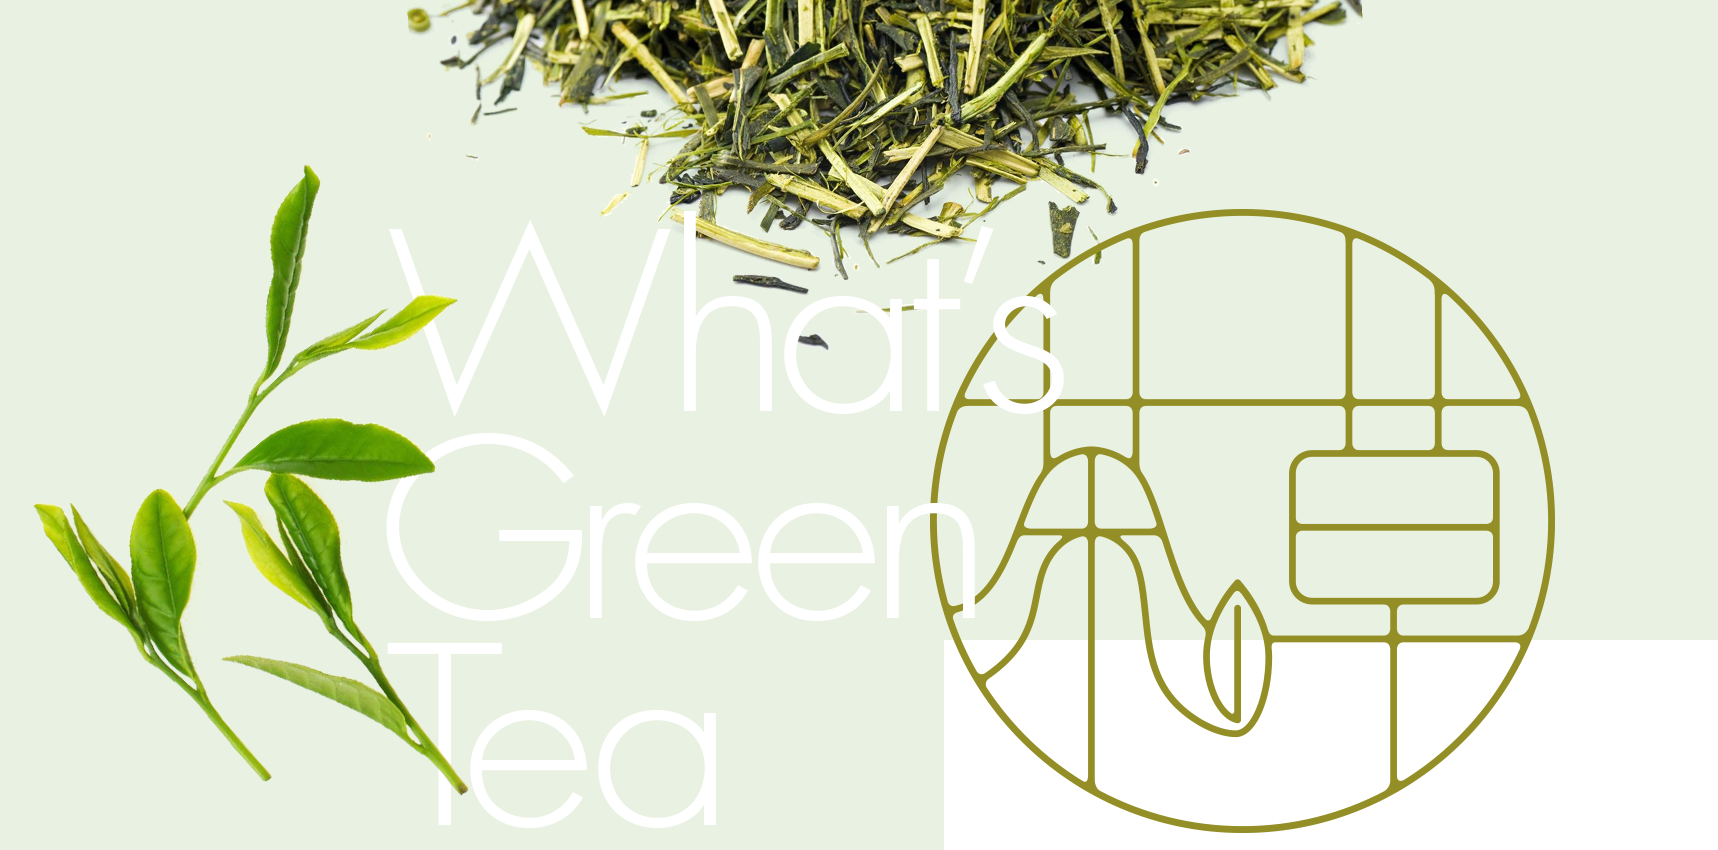 What's Green Tea?